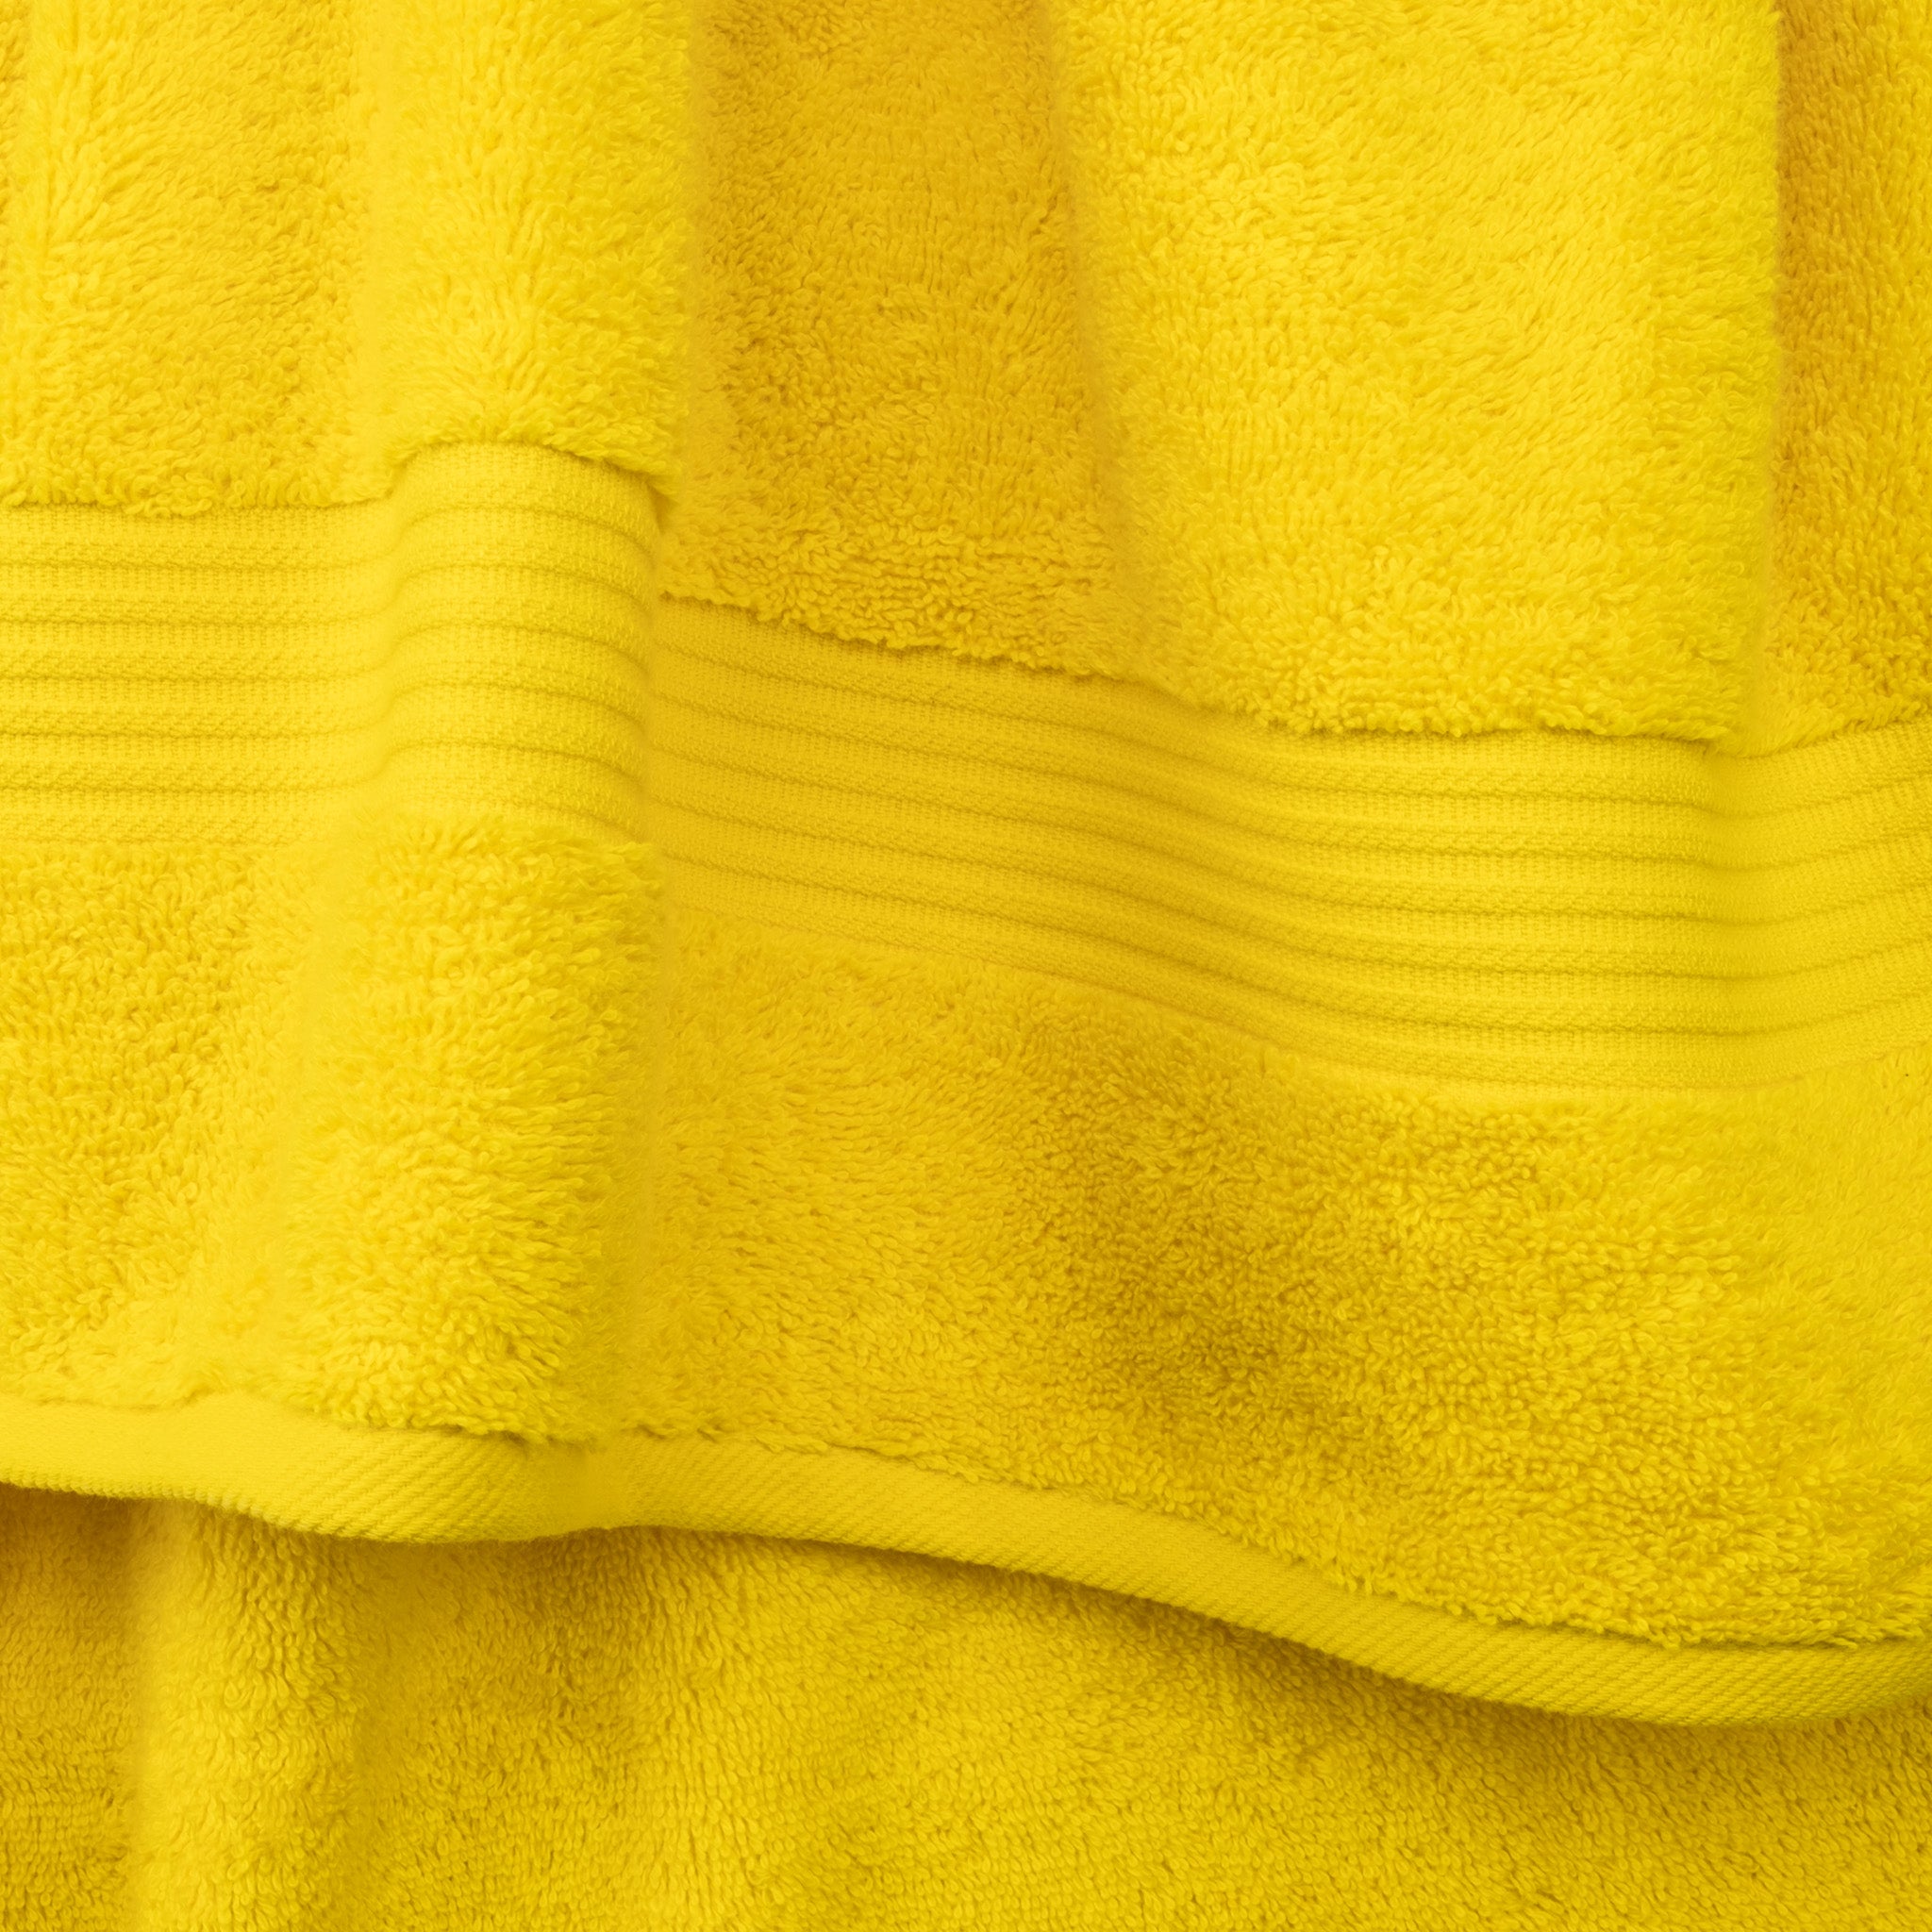 American Soft Linen Bekos 100% Cotton Turkish Towels, 4 Piece Washcloth Towel Set -yellow-04